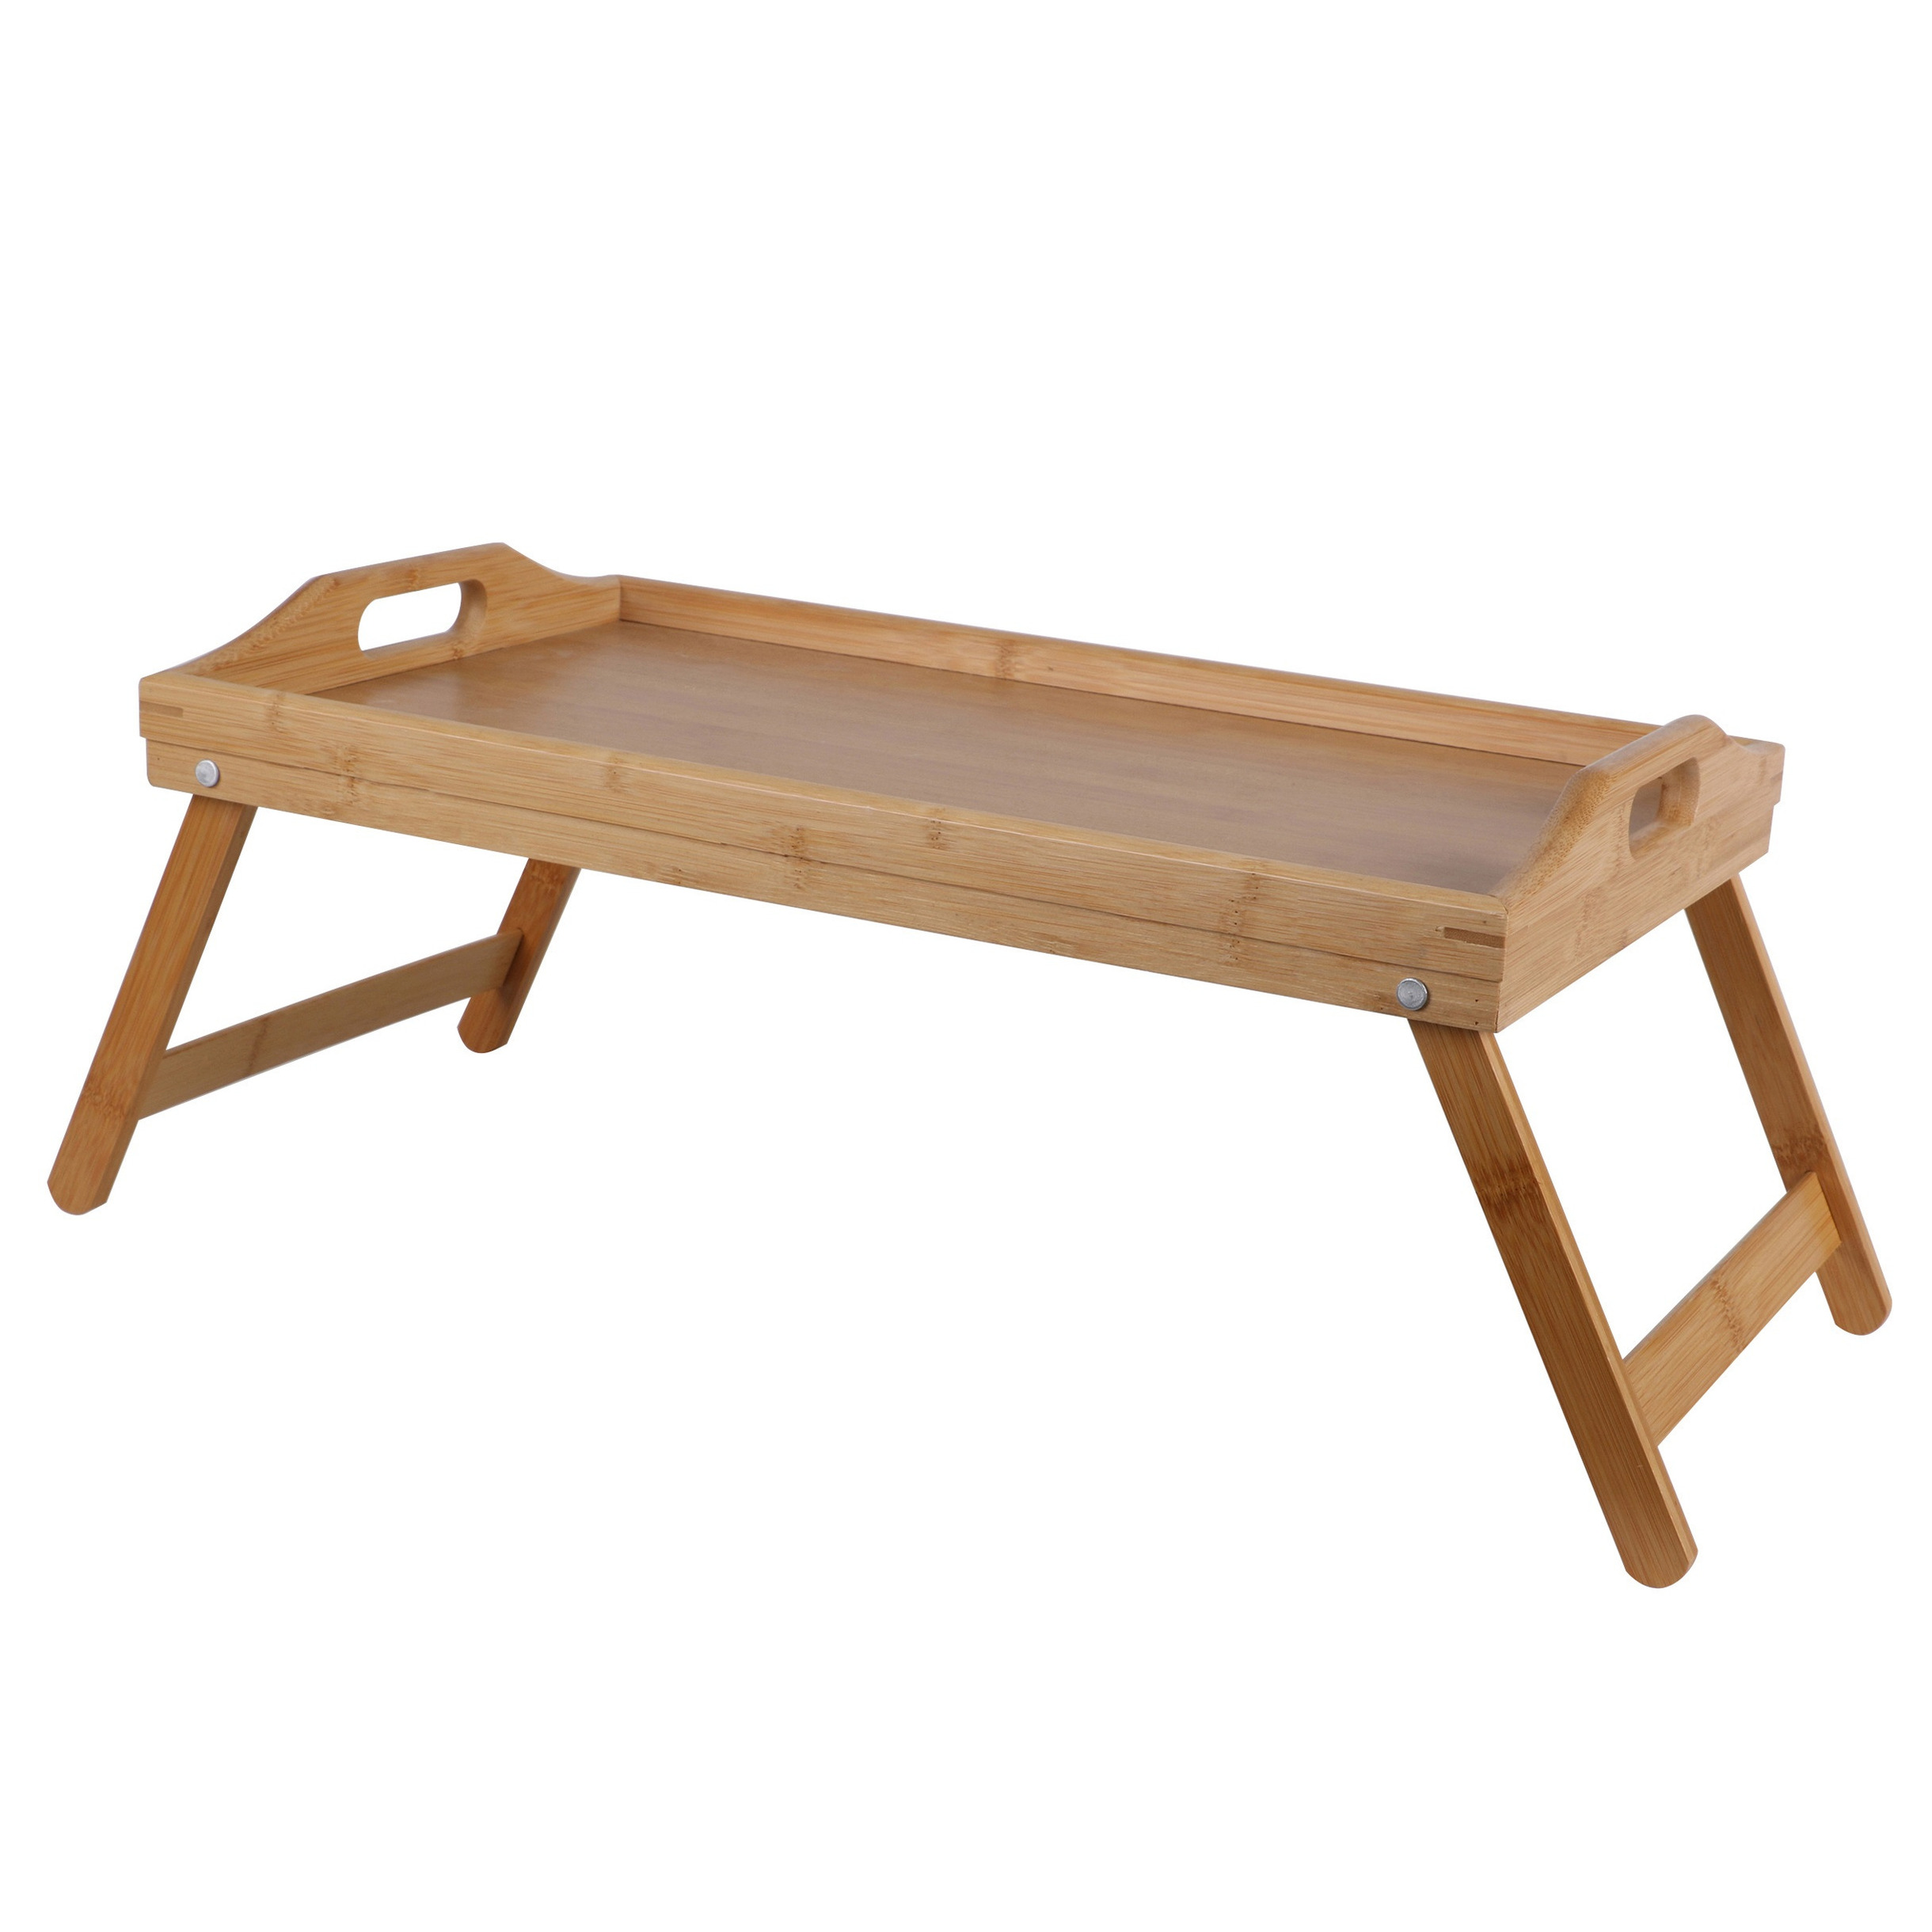 Bambou & Co Ontbijt op bed-tafeltje-dienblad op pootjes - 53 x 33 x 21 cm bamboe serveer tray